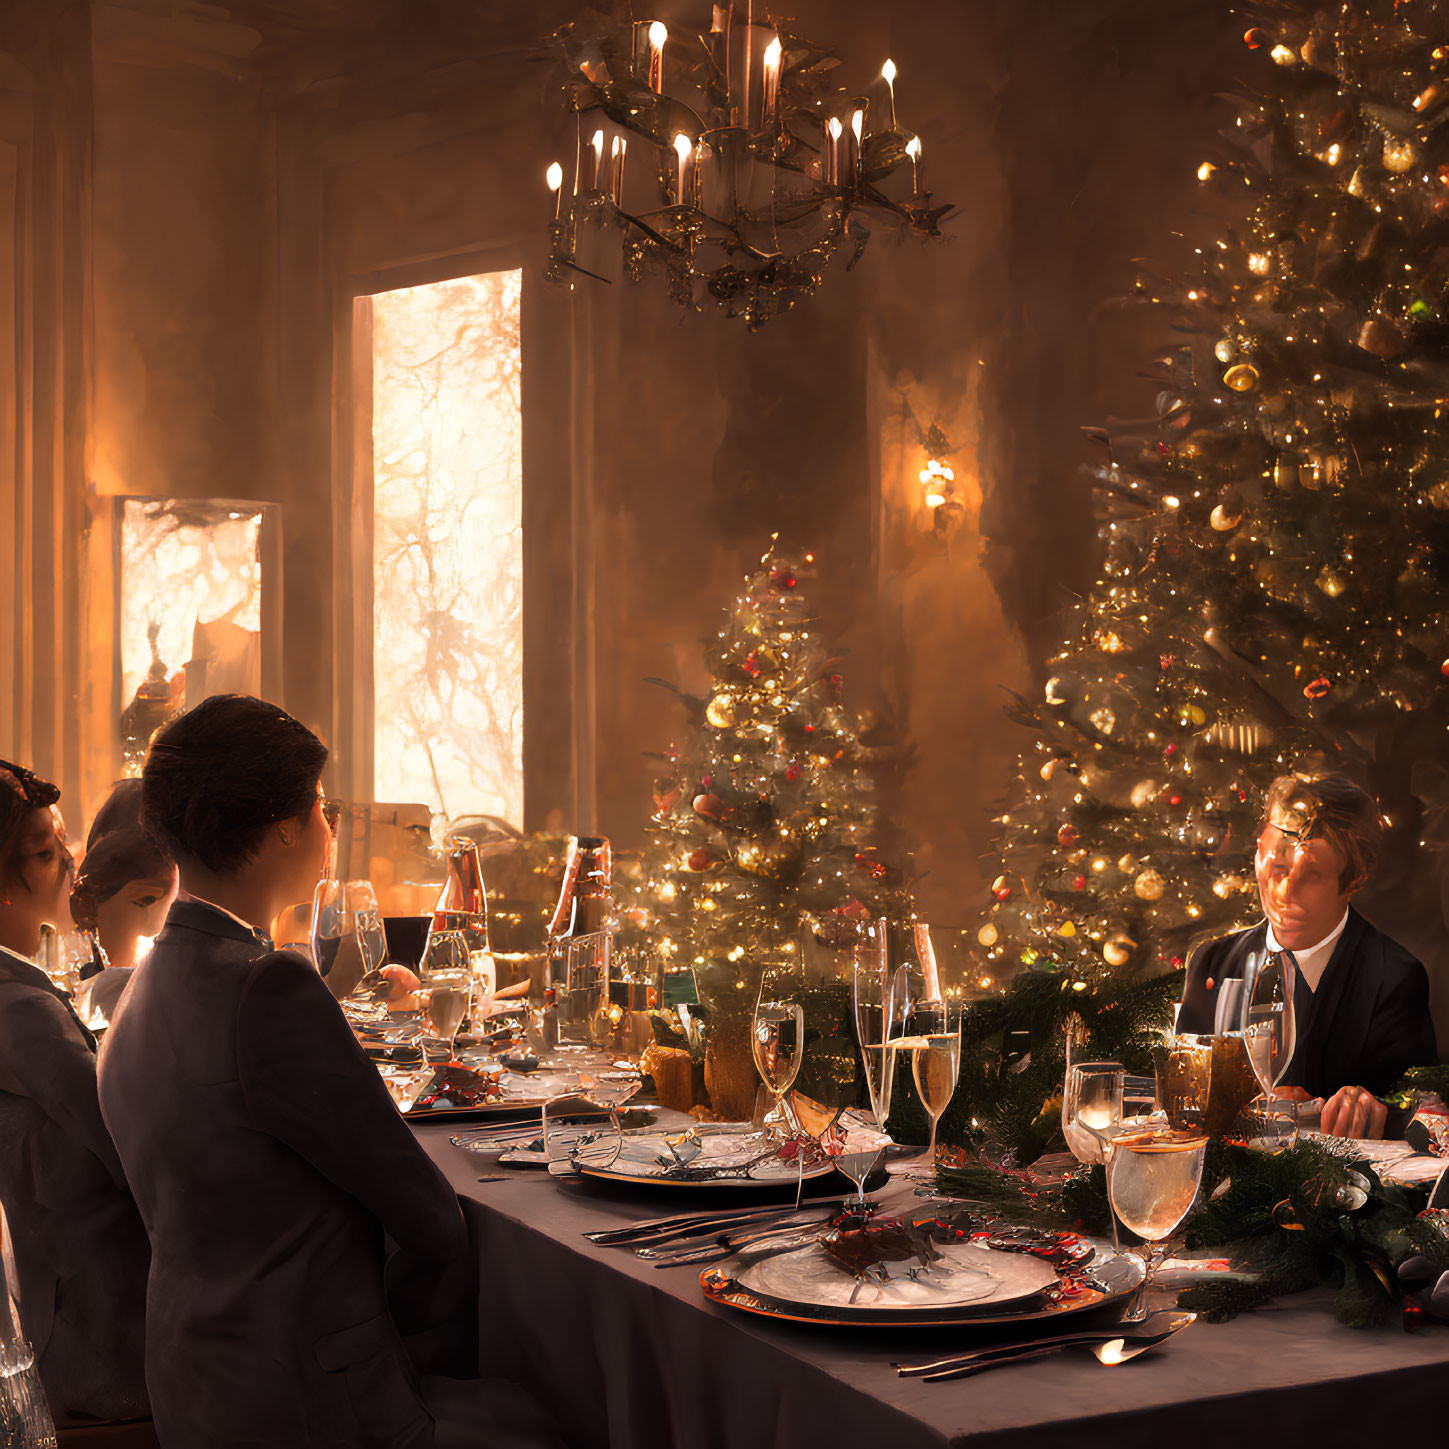 Festive Christmas dinner table with elegant decor and warm lighting